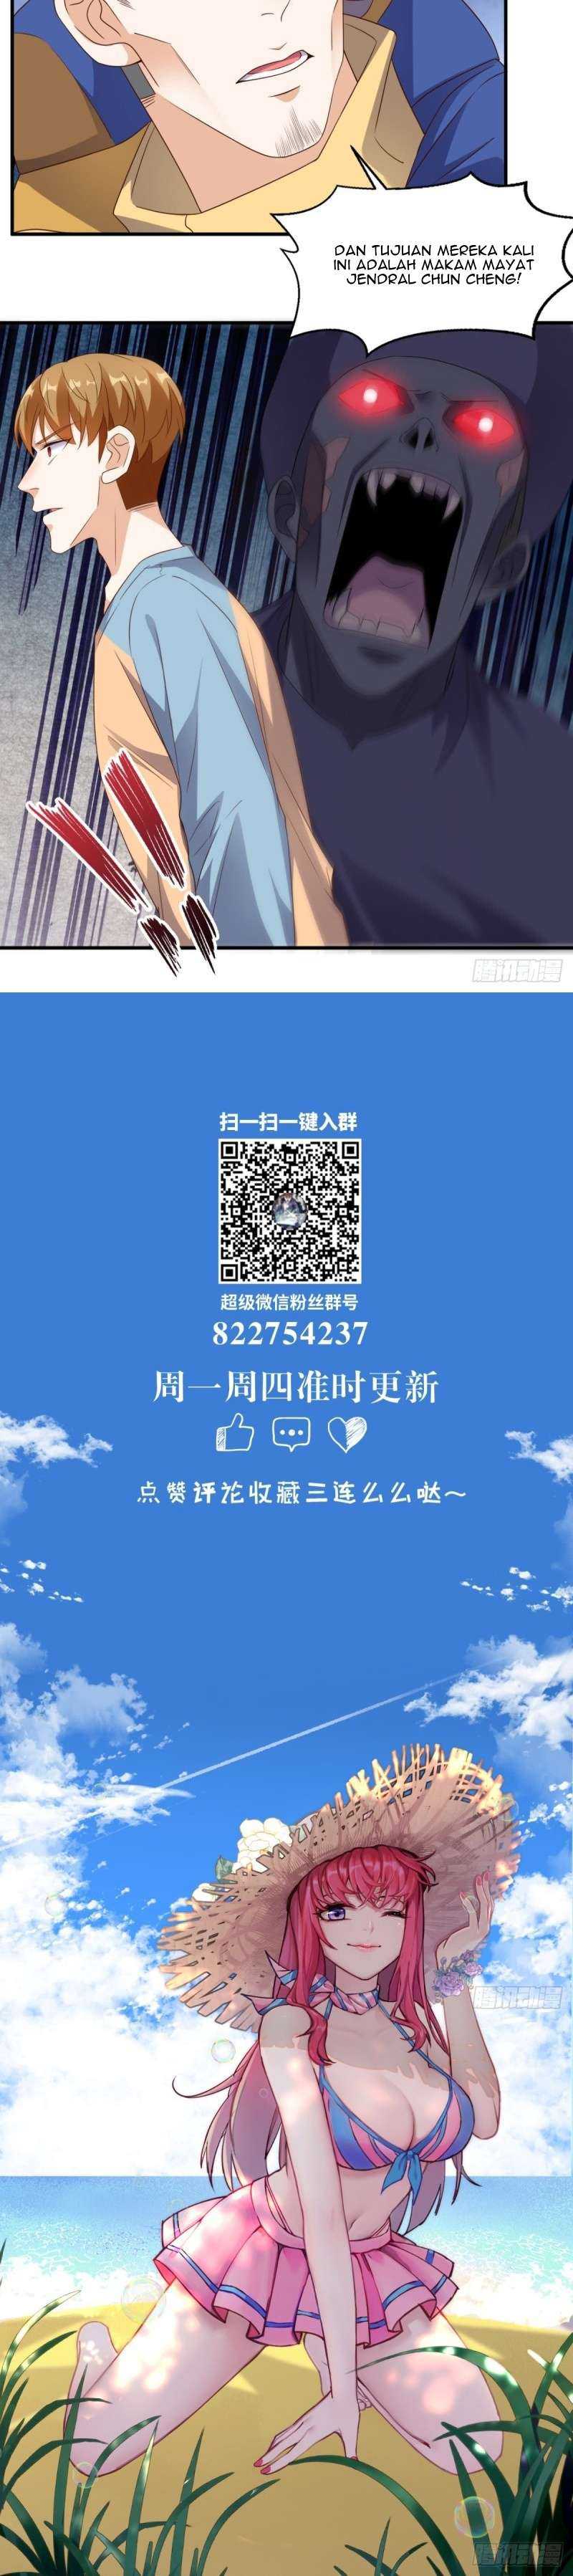 Super WeChat Chapter 117